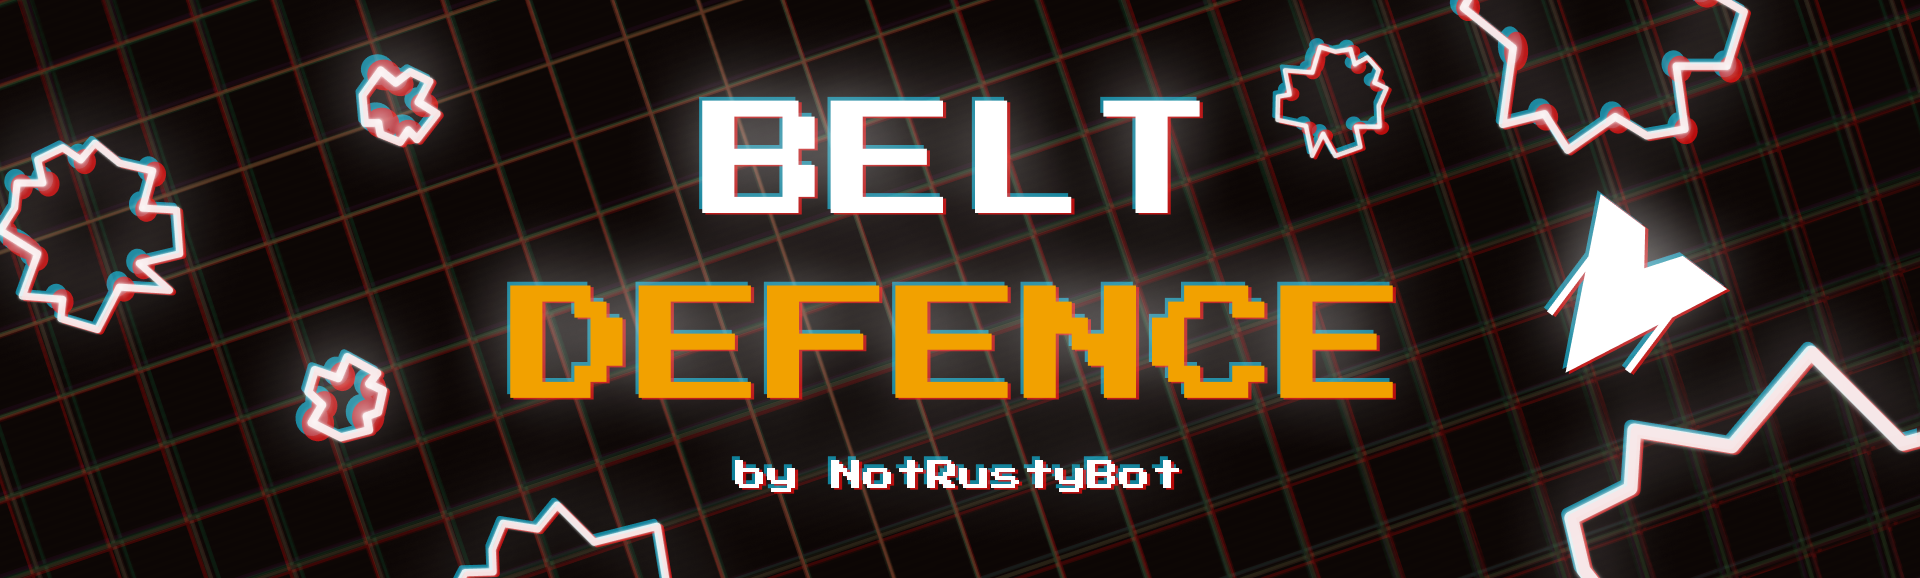 Belt Defence by NotRustyBot, Mylapqn